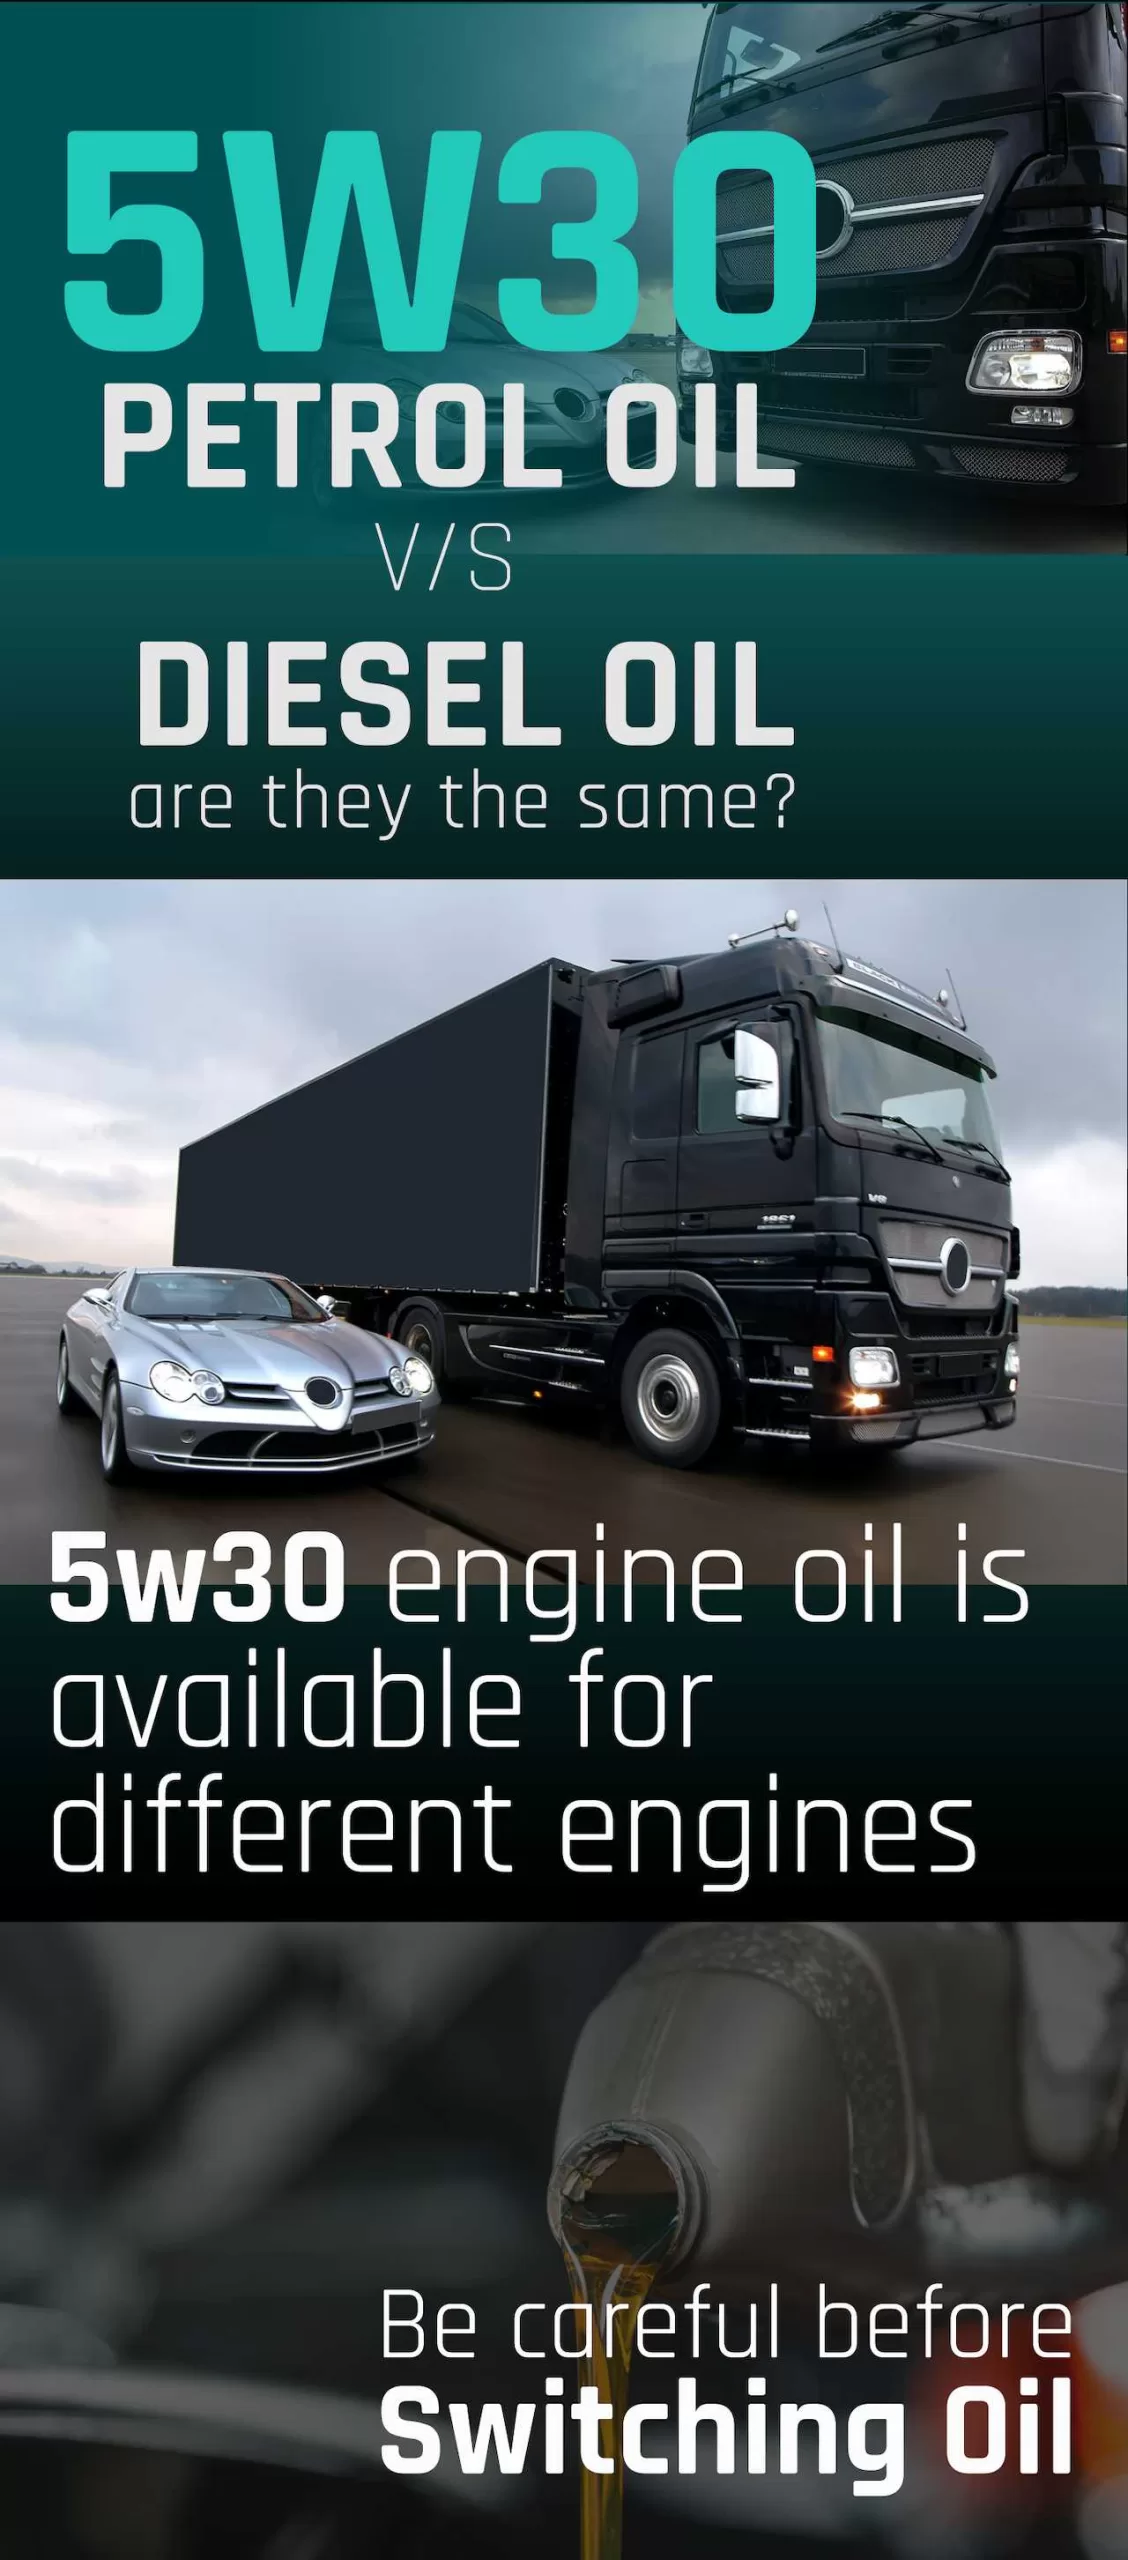 Armor Lubricants Blogpost 5w30 diesel oil vs petrol engine oil comparison featured banner